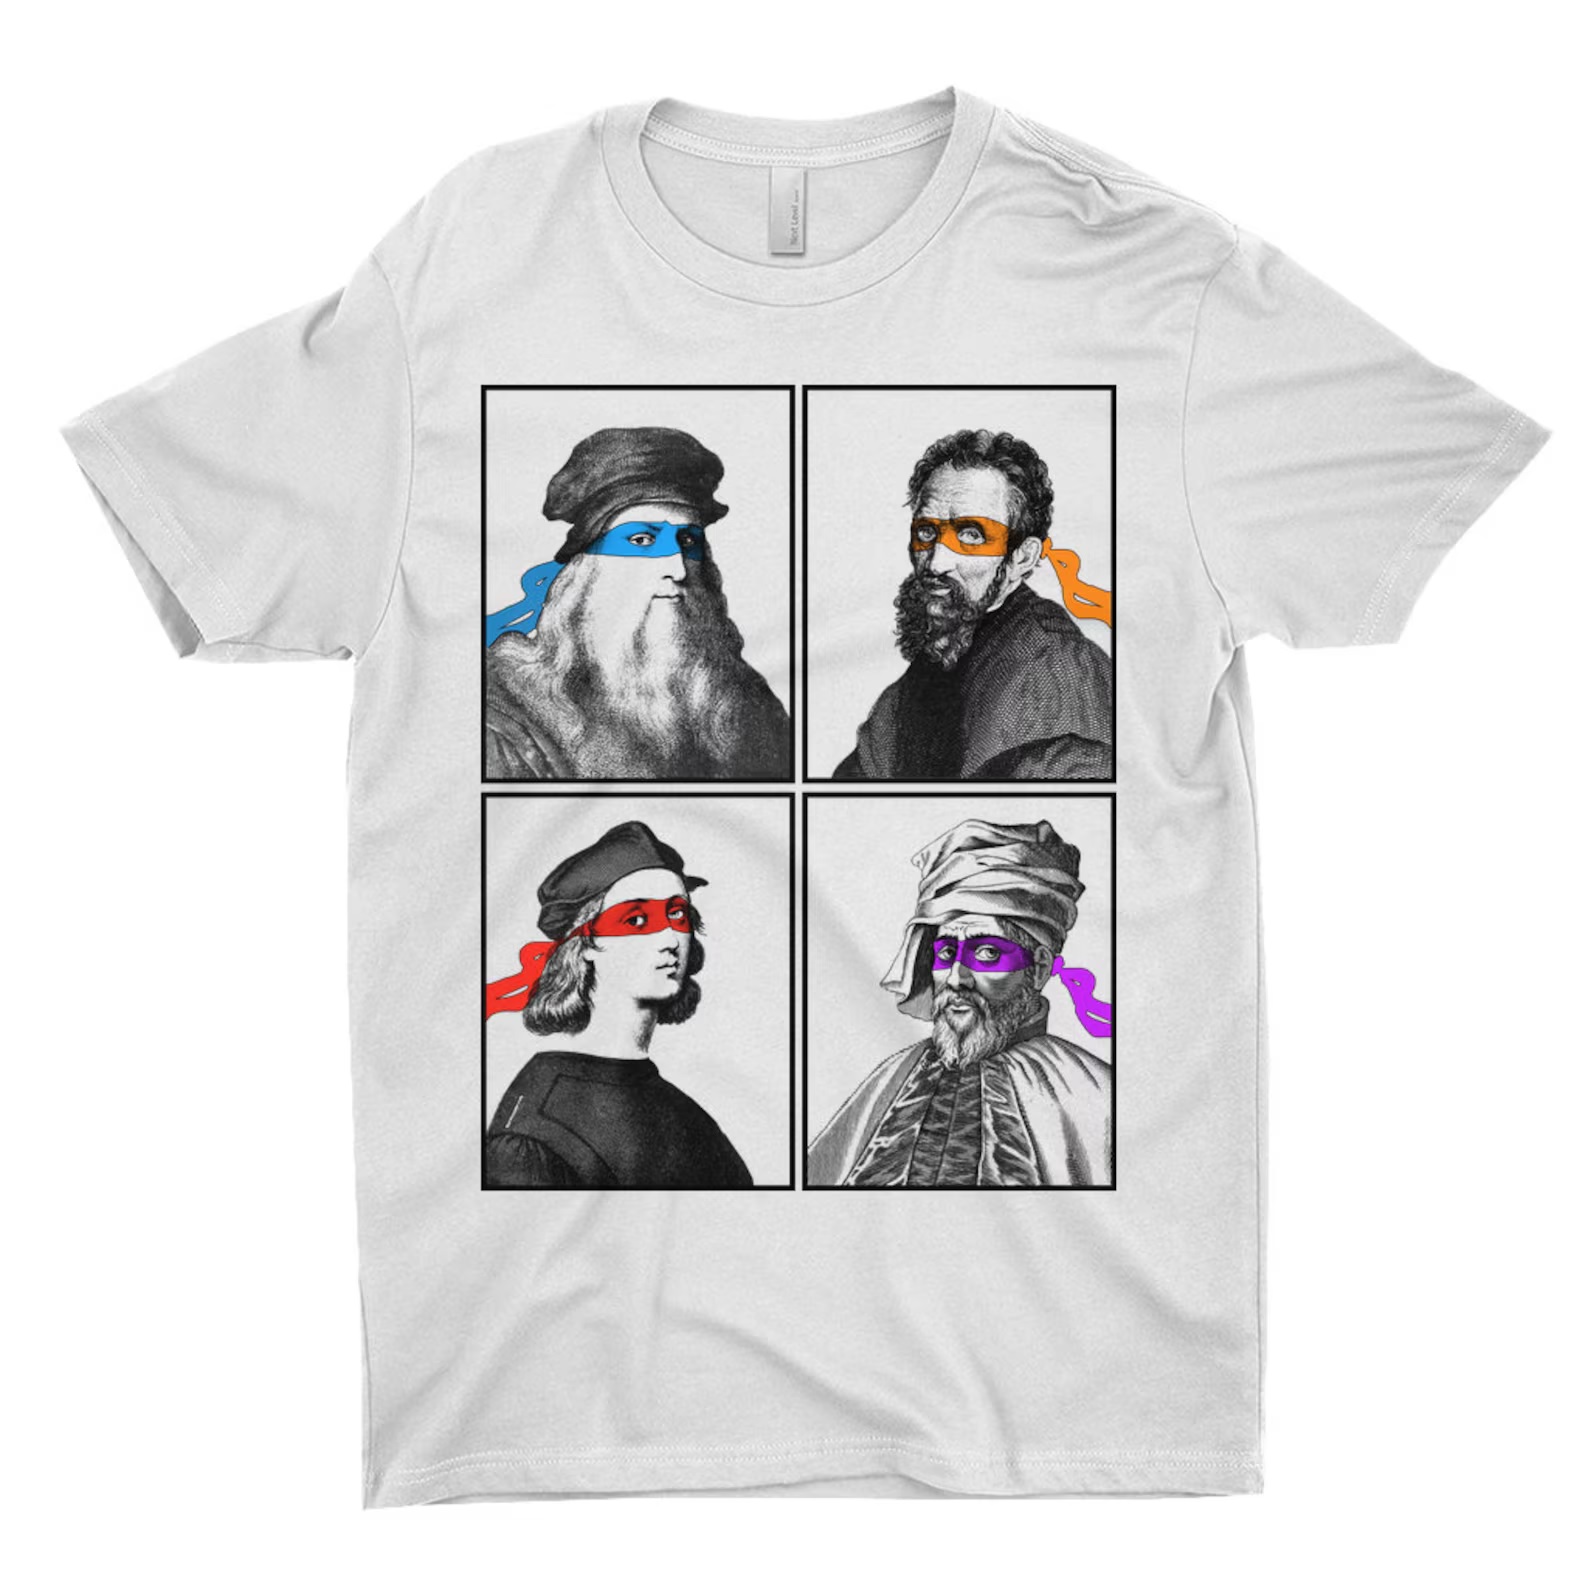 A white t-shirt with images of Renaissance painters Leonardo, Donatello, Raphael, and Michelangelo wearing ninja turtles masks